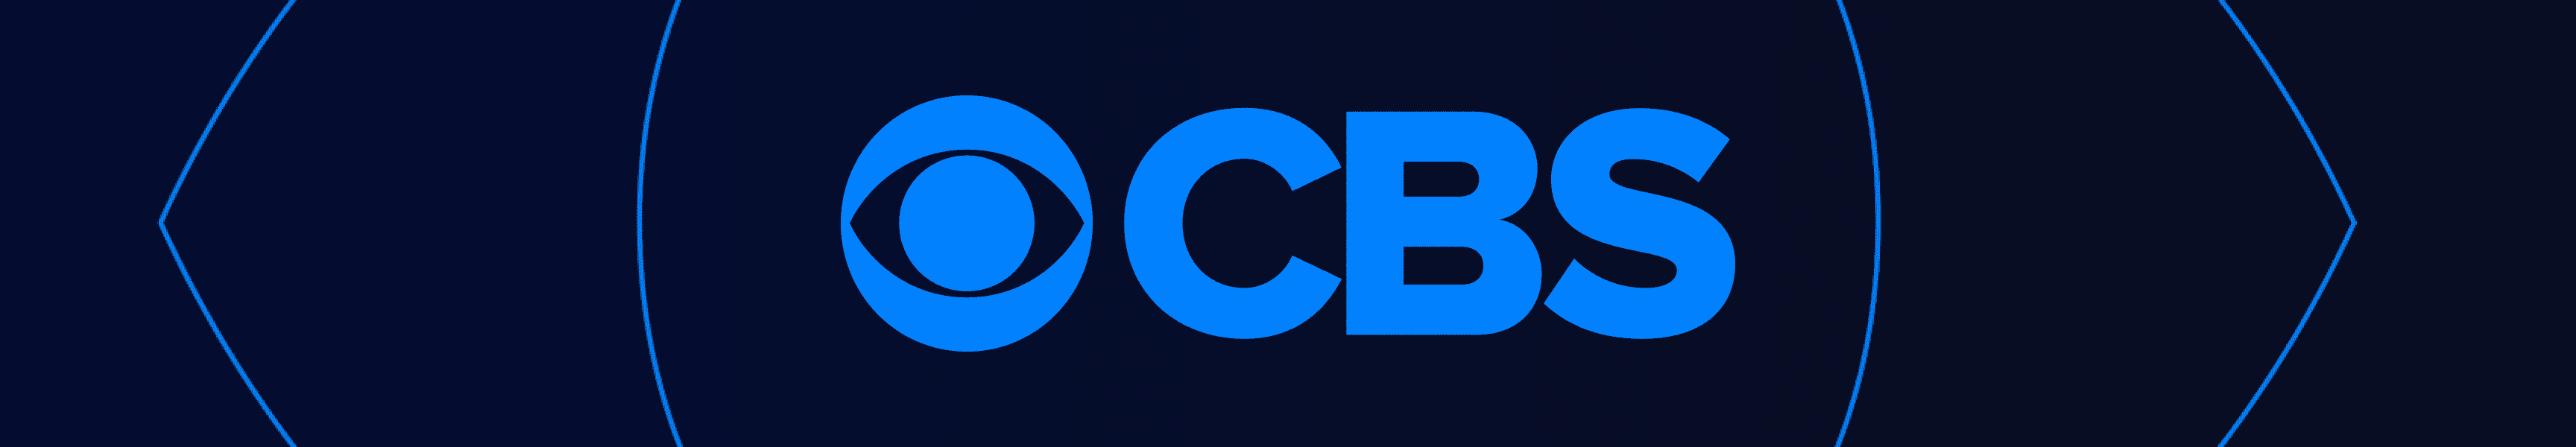 CBS Entertainment Joyería